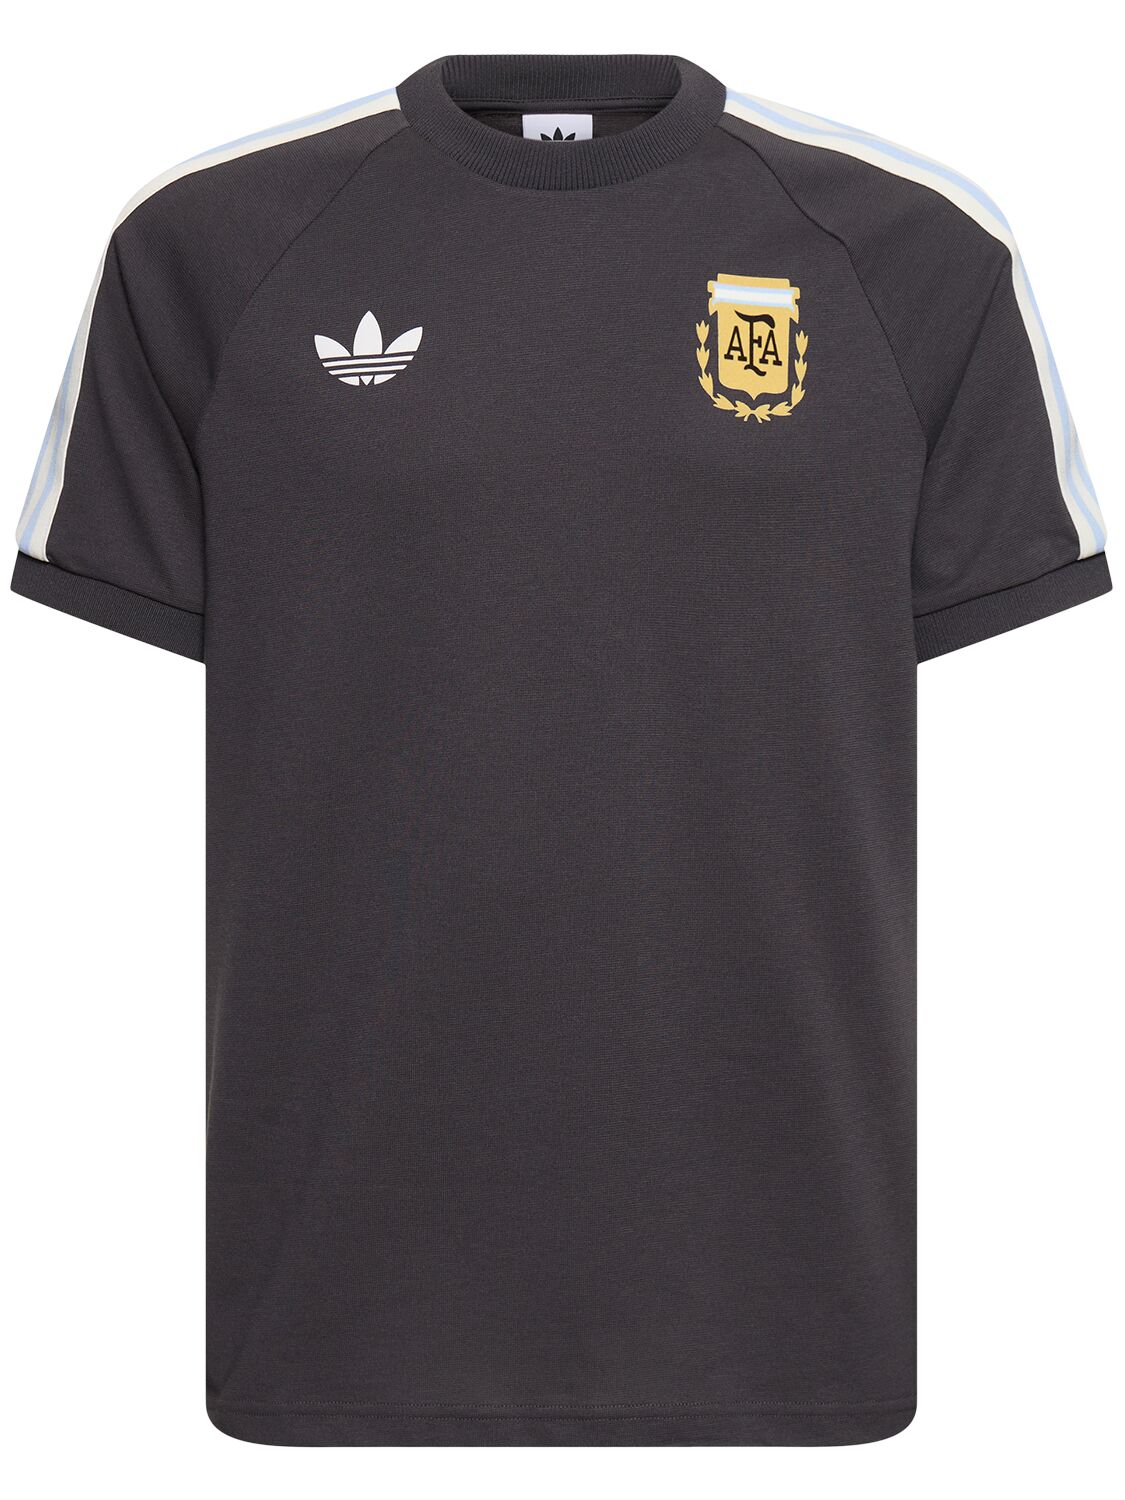 Image of Argentina T-shirt